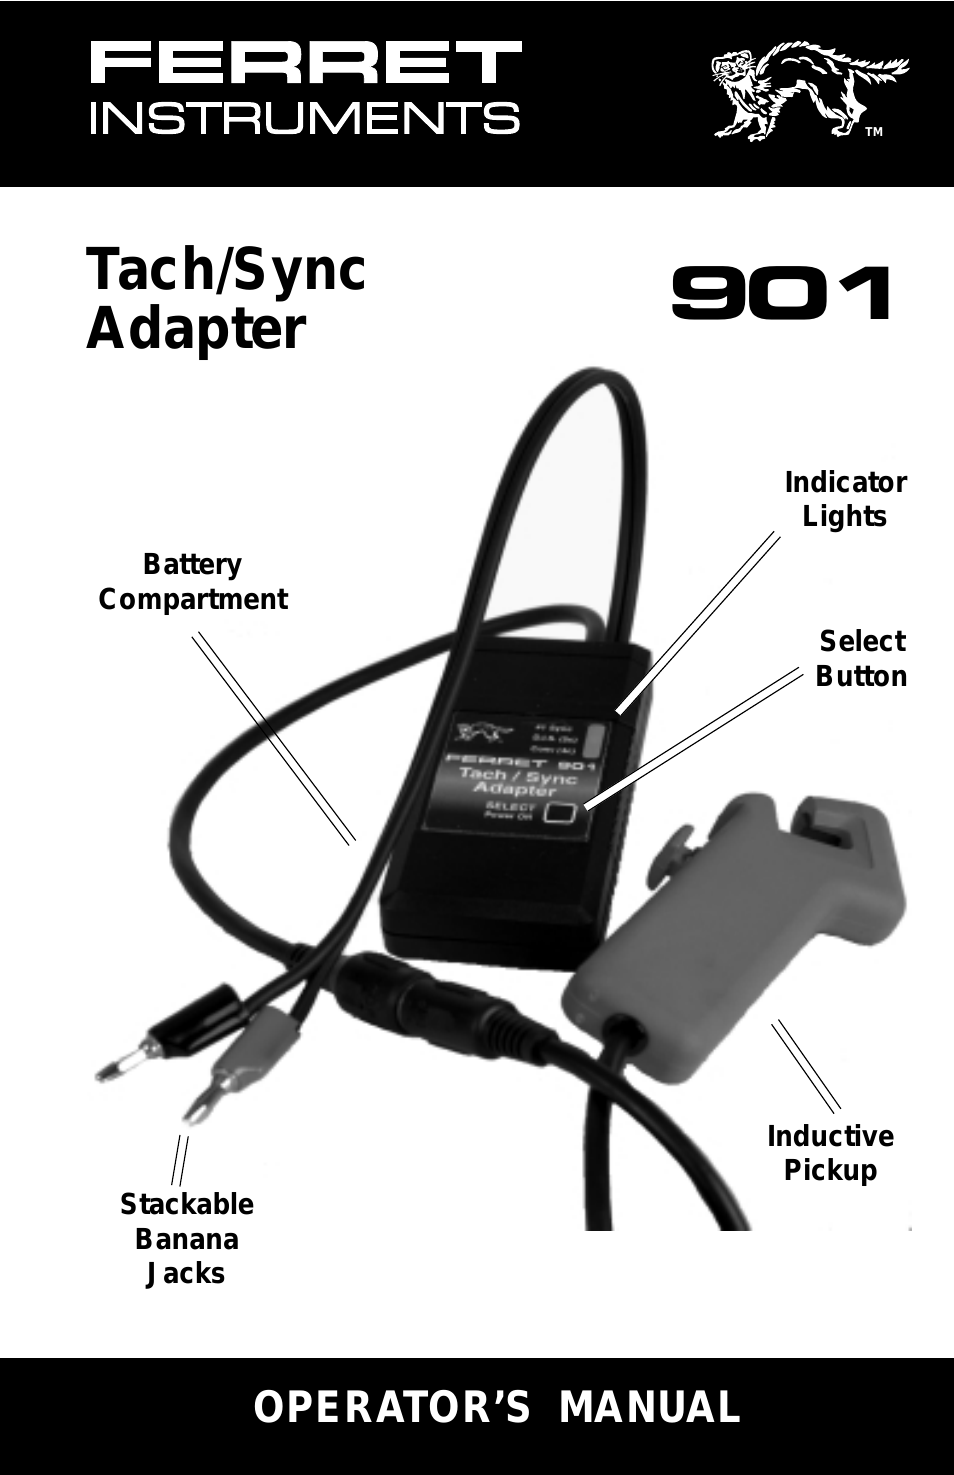 Ferret 901 RPM Adapter